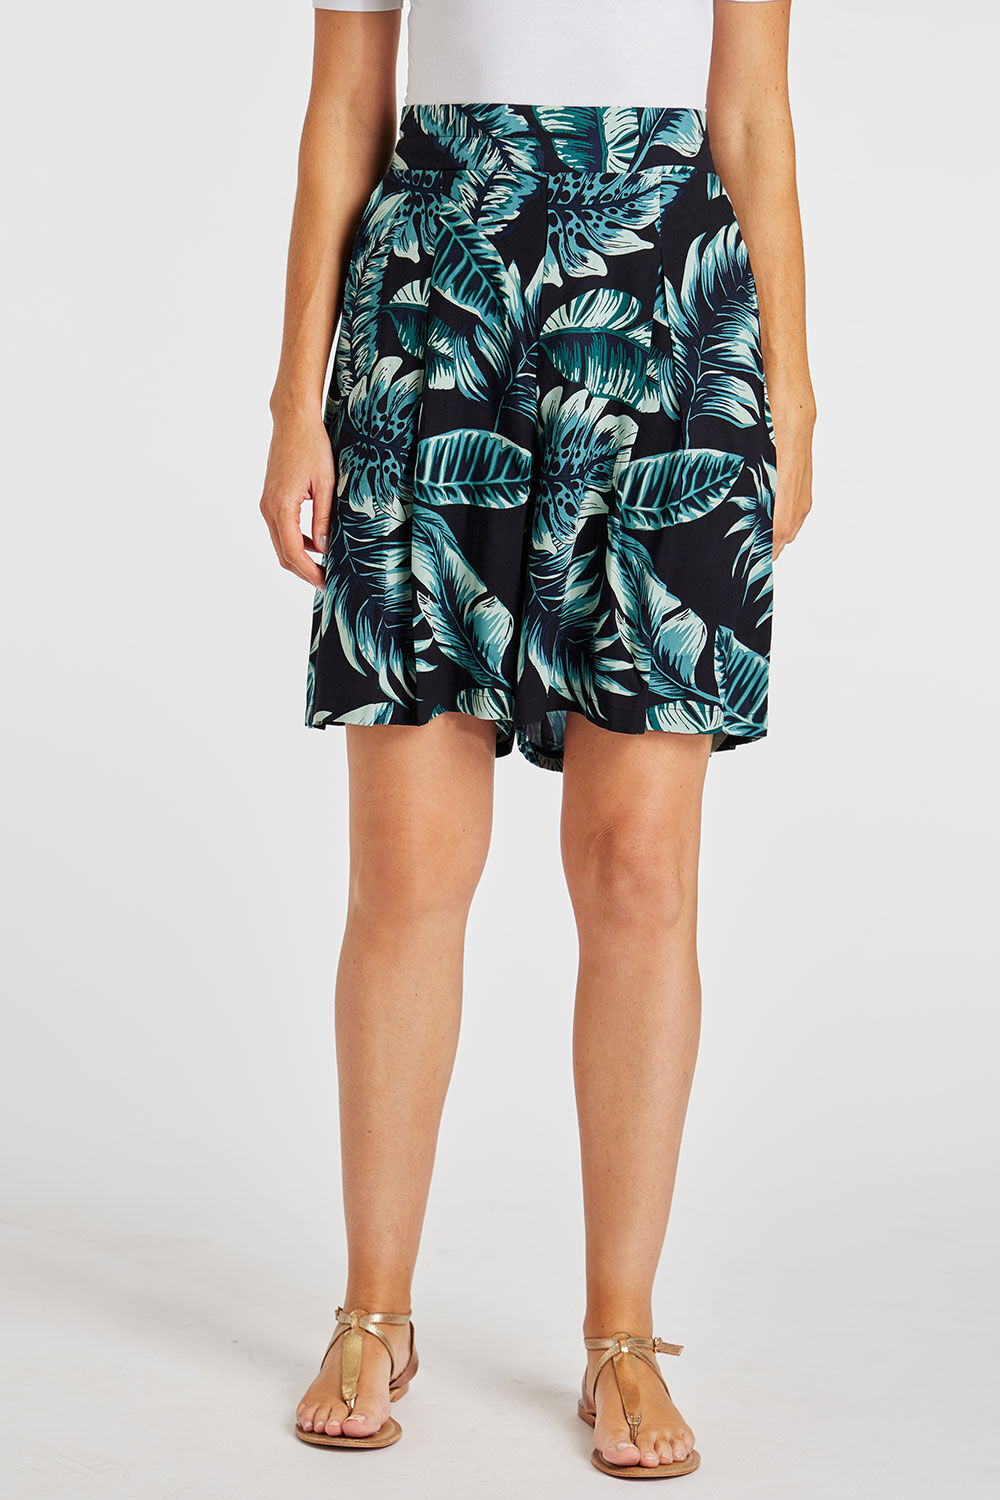 Bonmarche Black/green Palm Print Viscose Elasticated Shorts, Size: 14